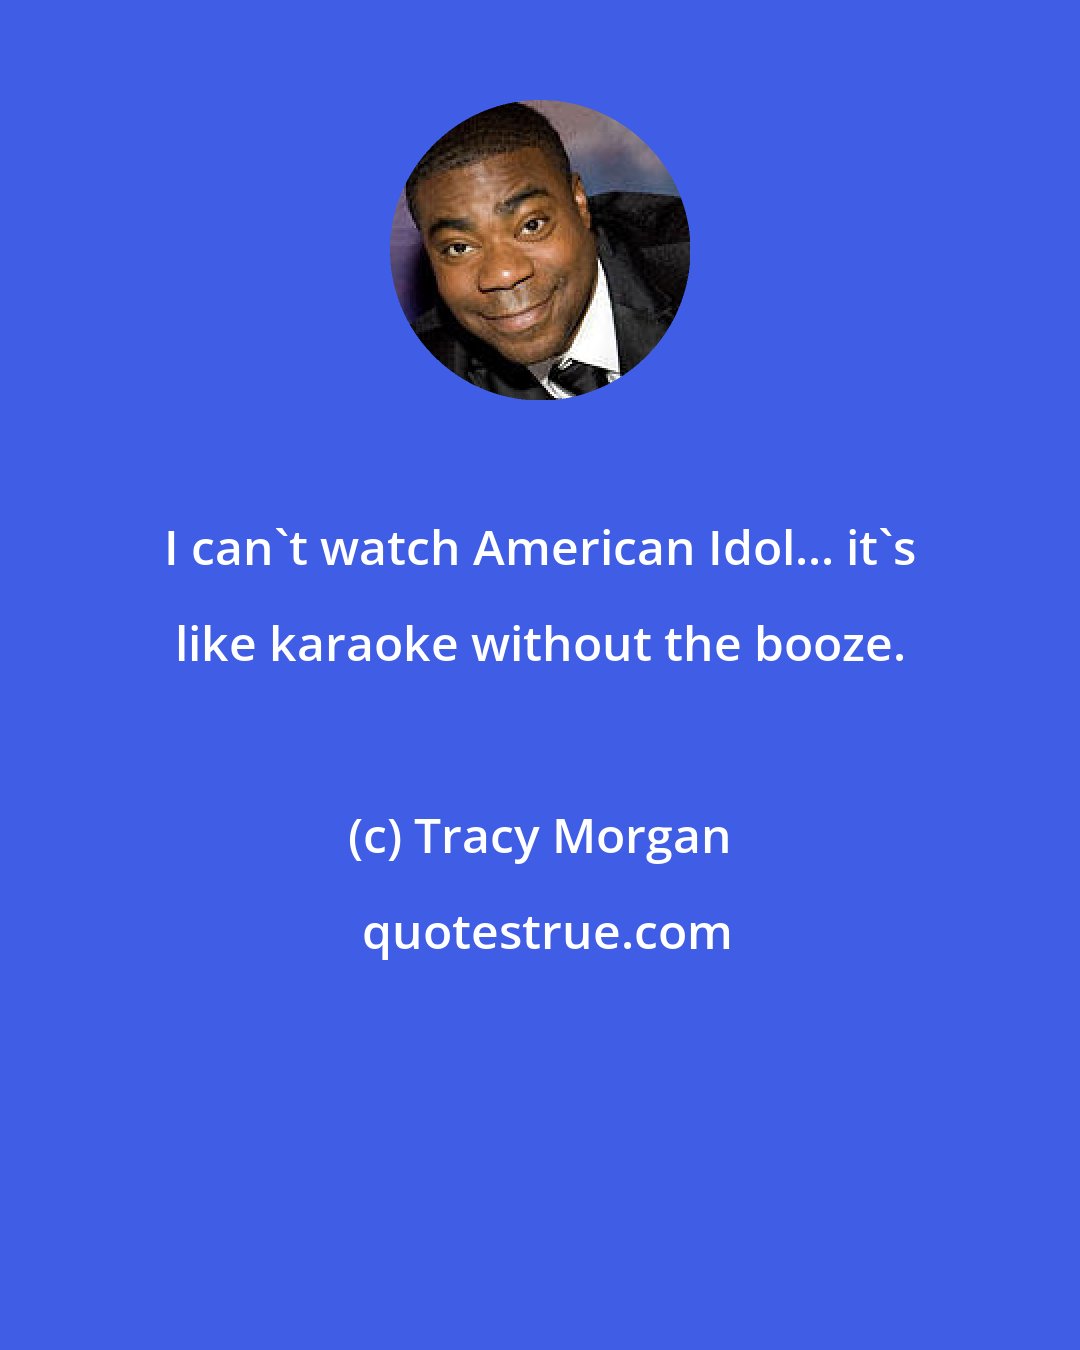 Tracy Morgan: I can't watch American Idol... it's like karaoke without the booze.